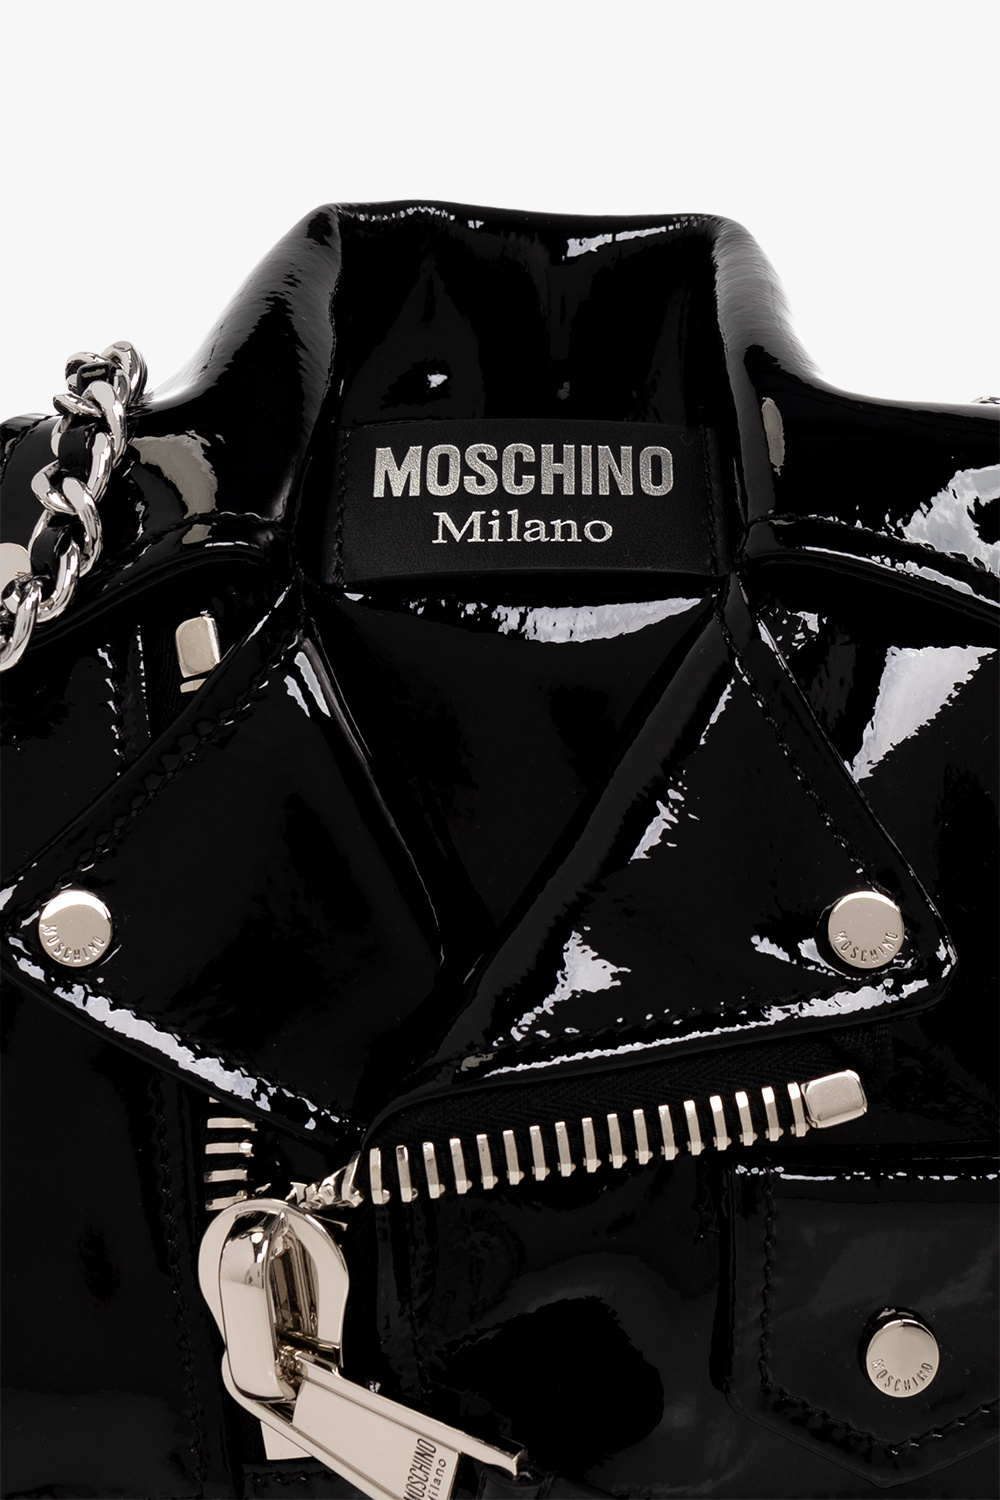 Moschino ‘Biker’ shoulder bag